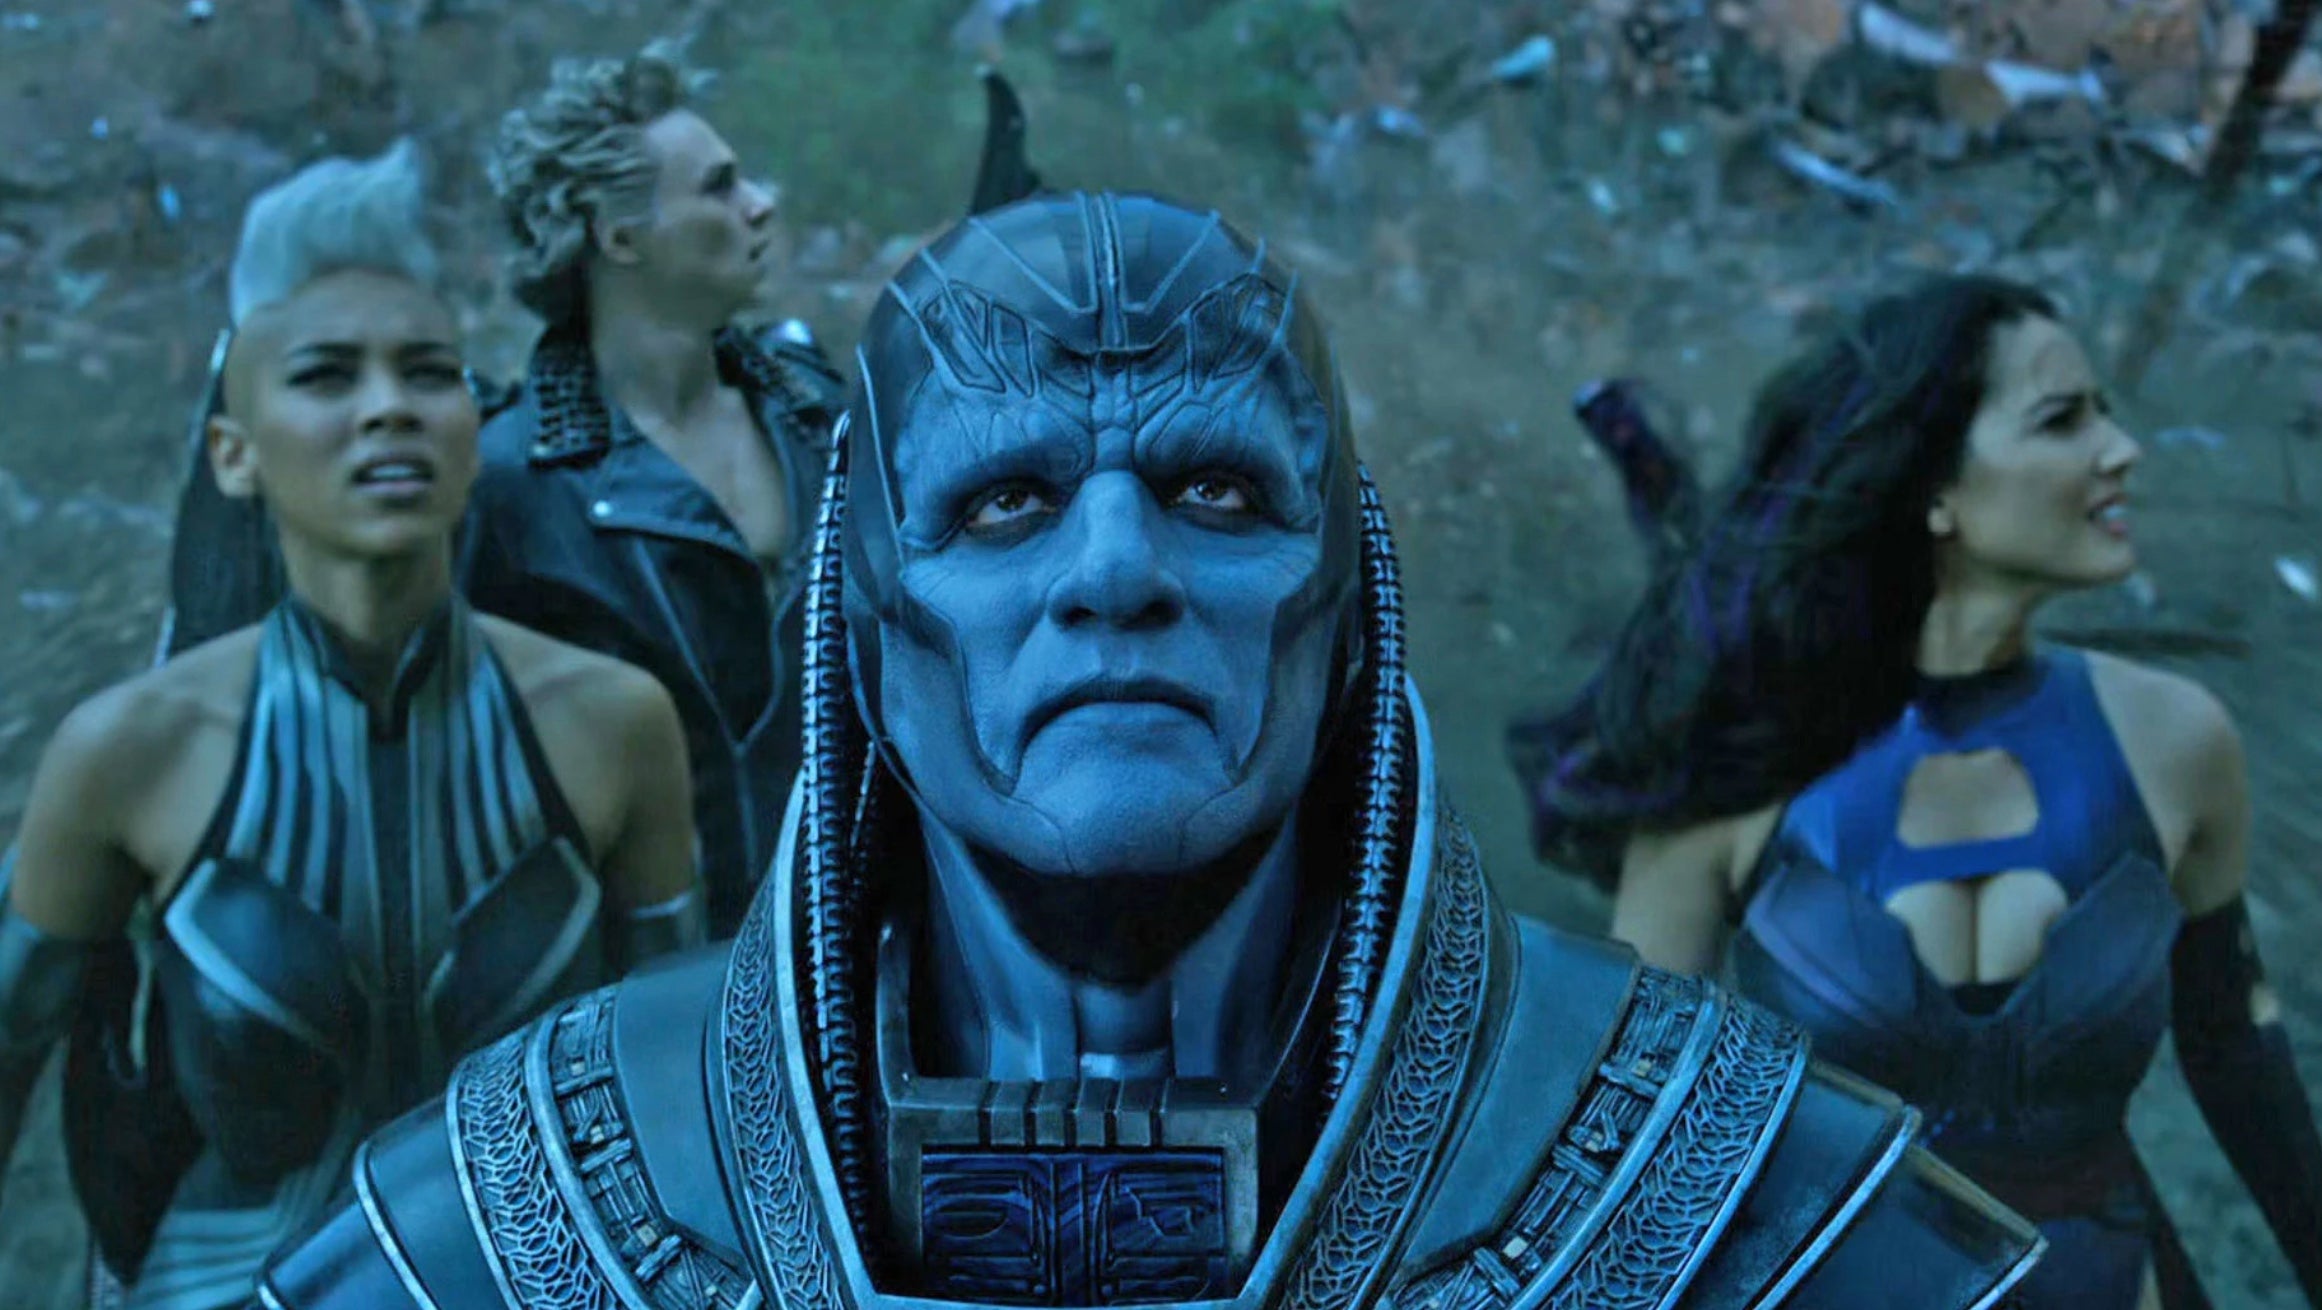 Oscar Isaac in X-Men Apocalypse. (Image: Fox)